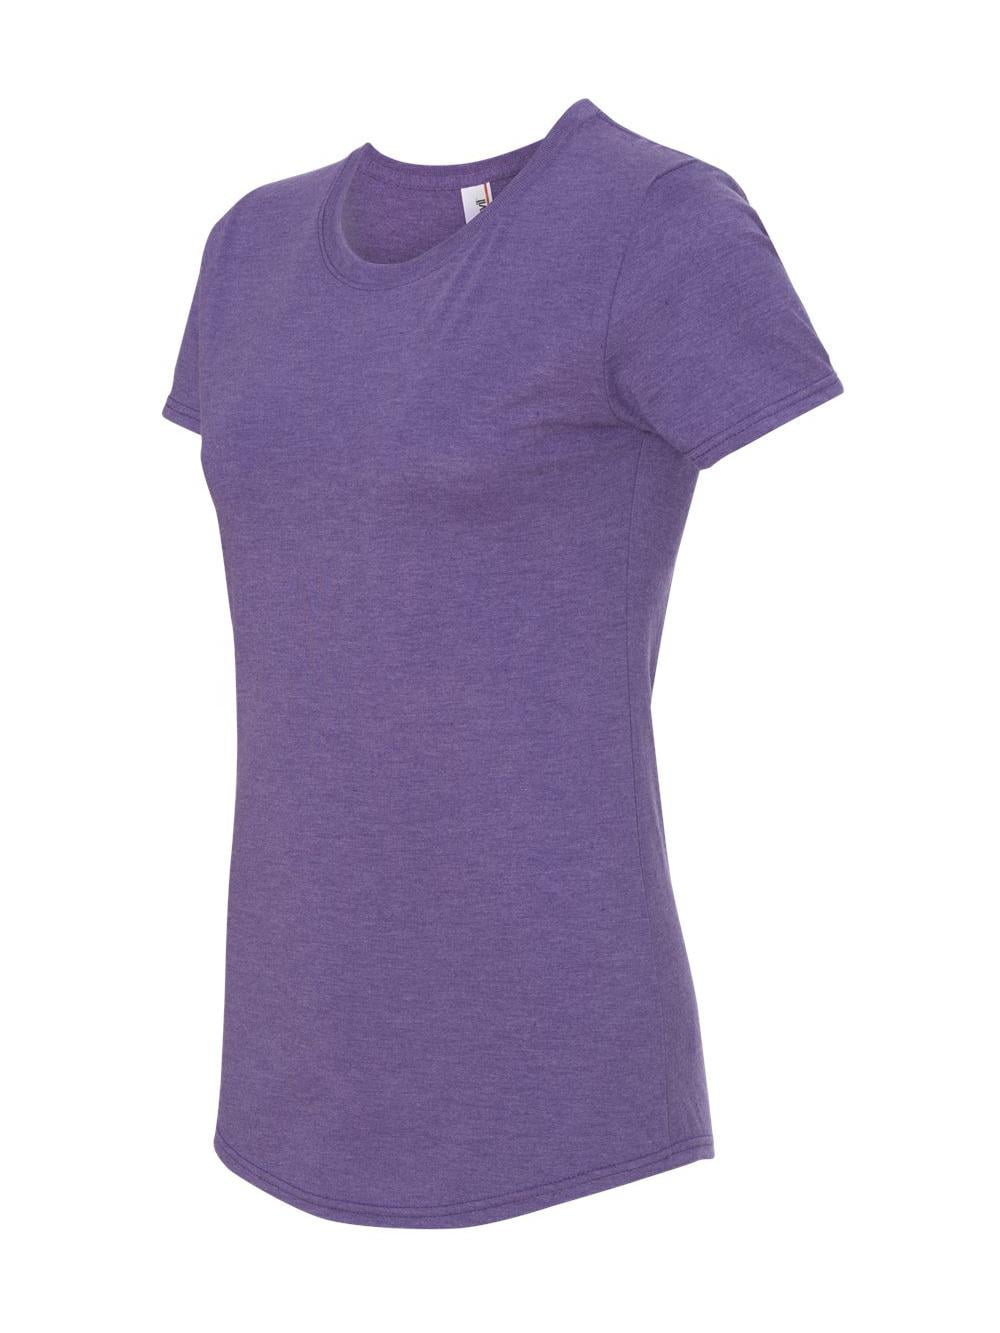 Anvil - Women's Triblend T-Shirt - 6750L - Walmart.com